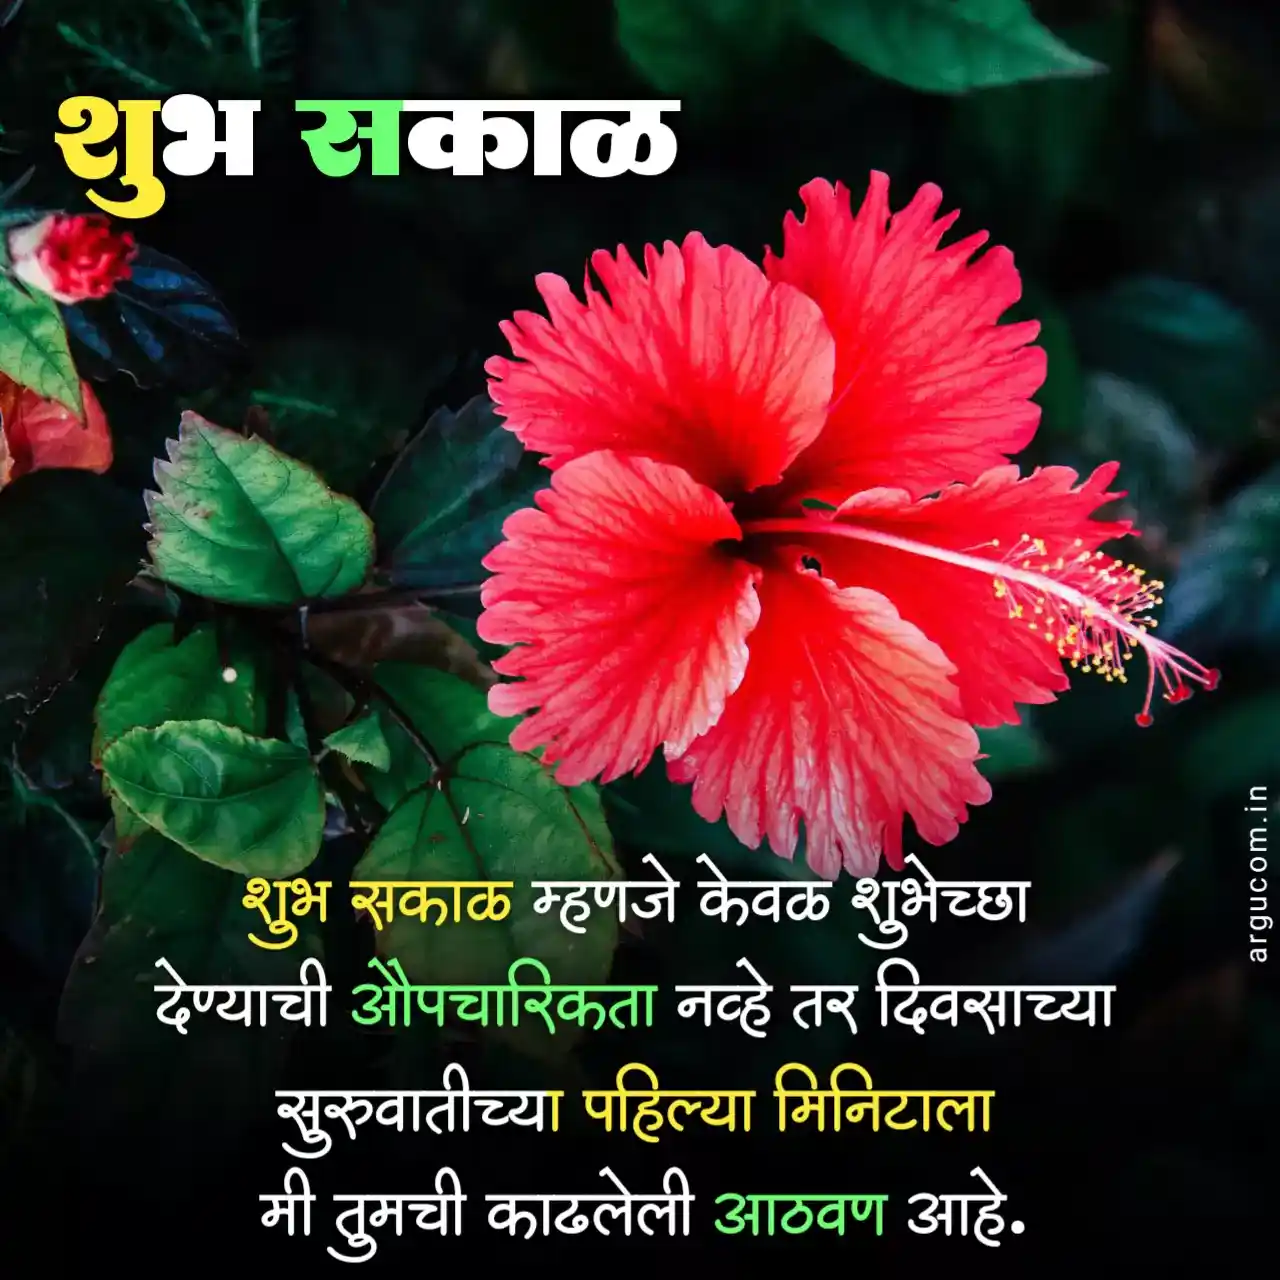 Good morning quotes in marathi